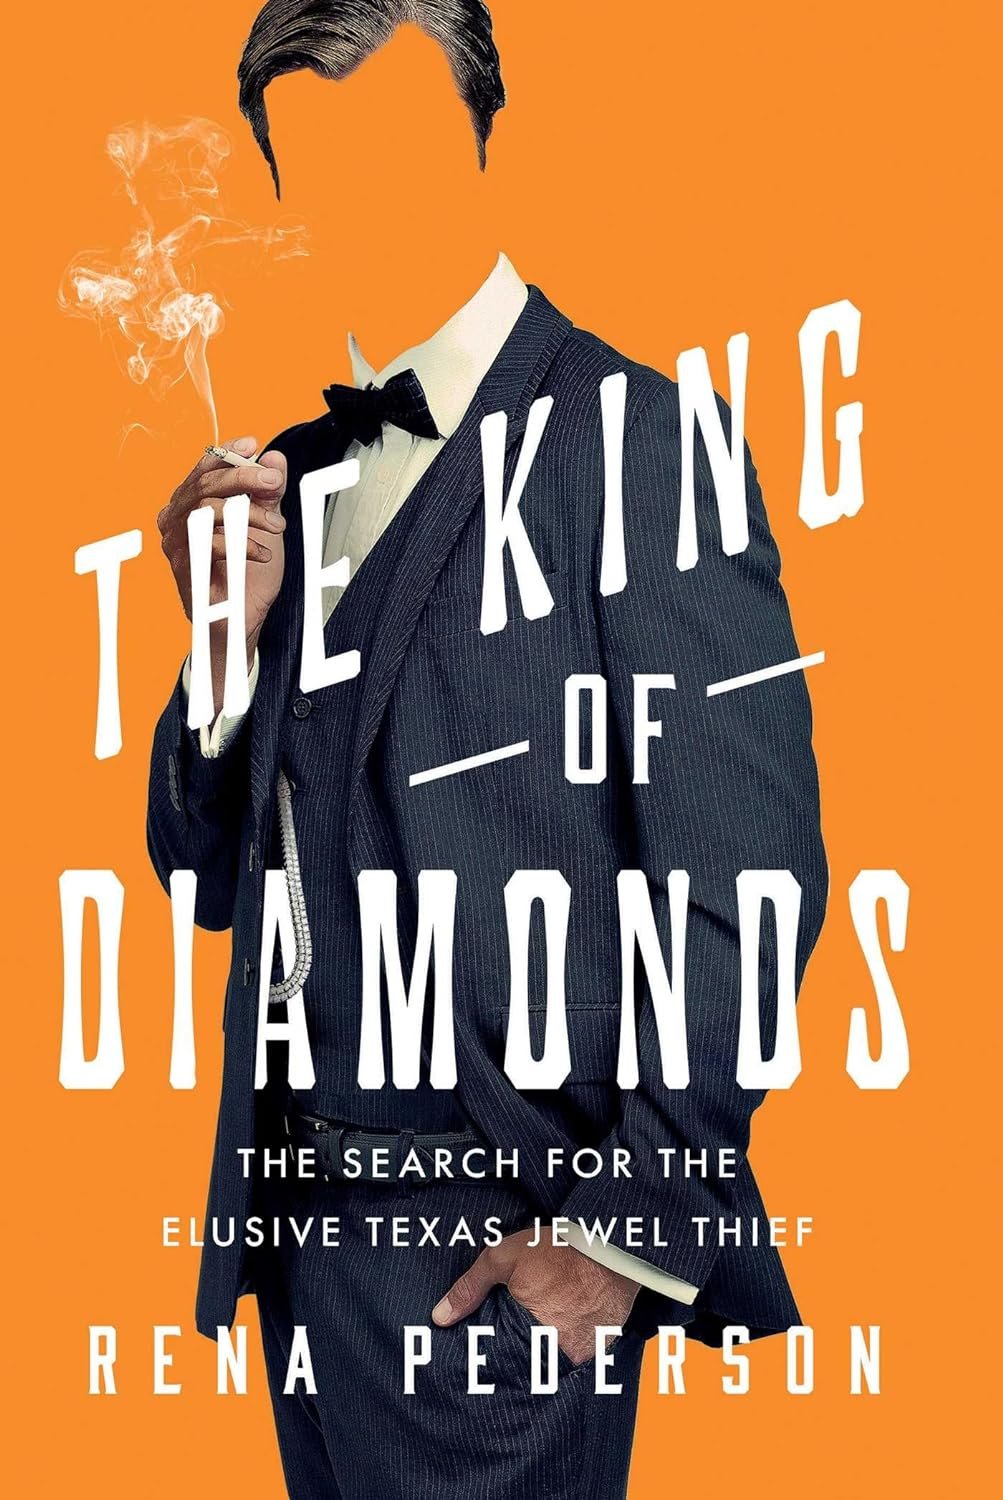 "The King of Diamonds" by Rena Pederson (WSJ)